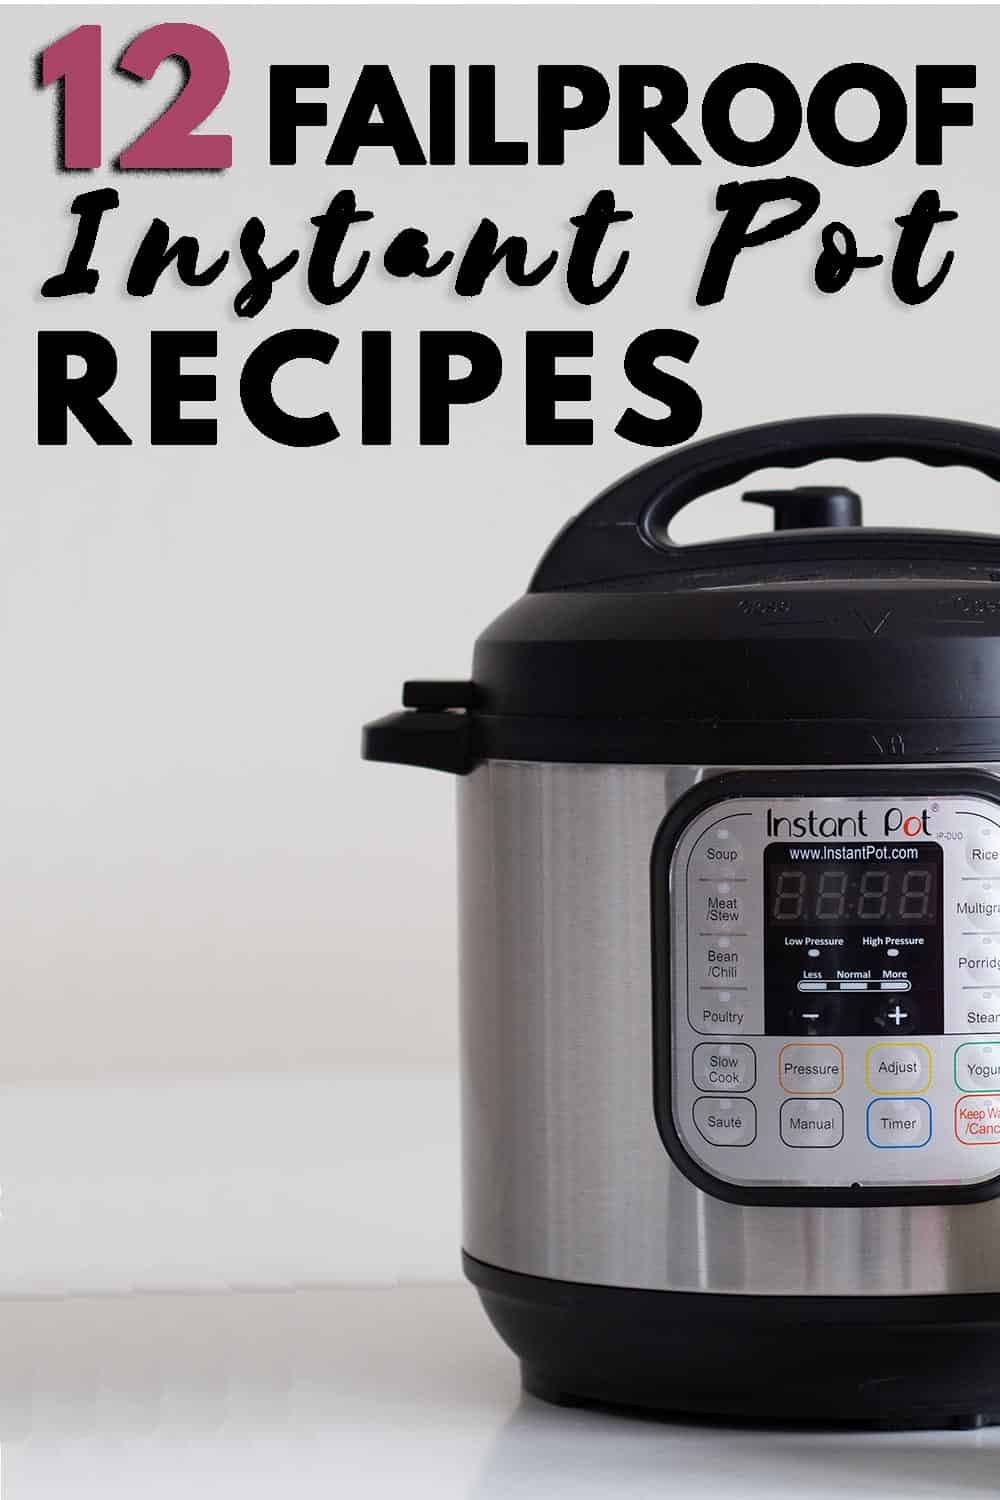 12 Failproof Instant Pot Recipes - Green Healthy Cooking